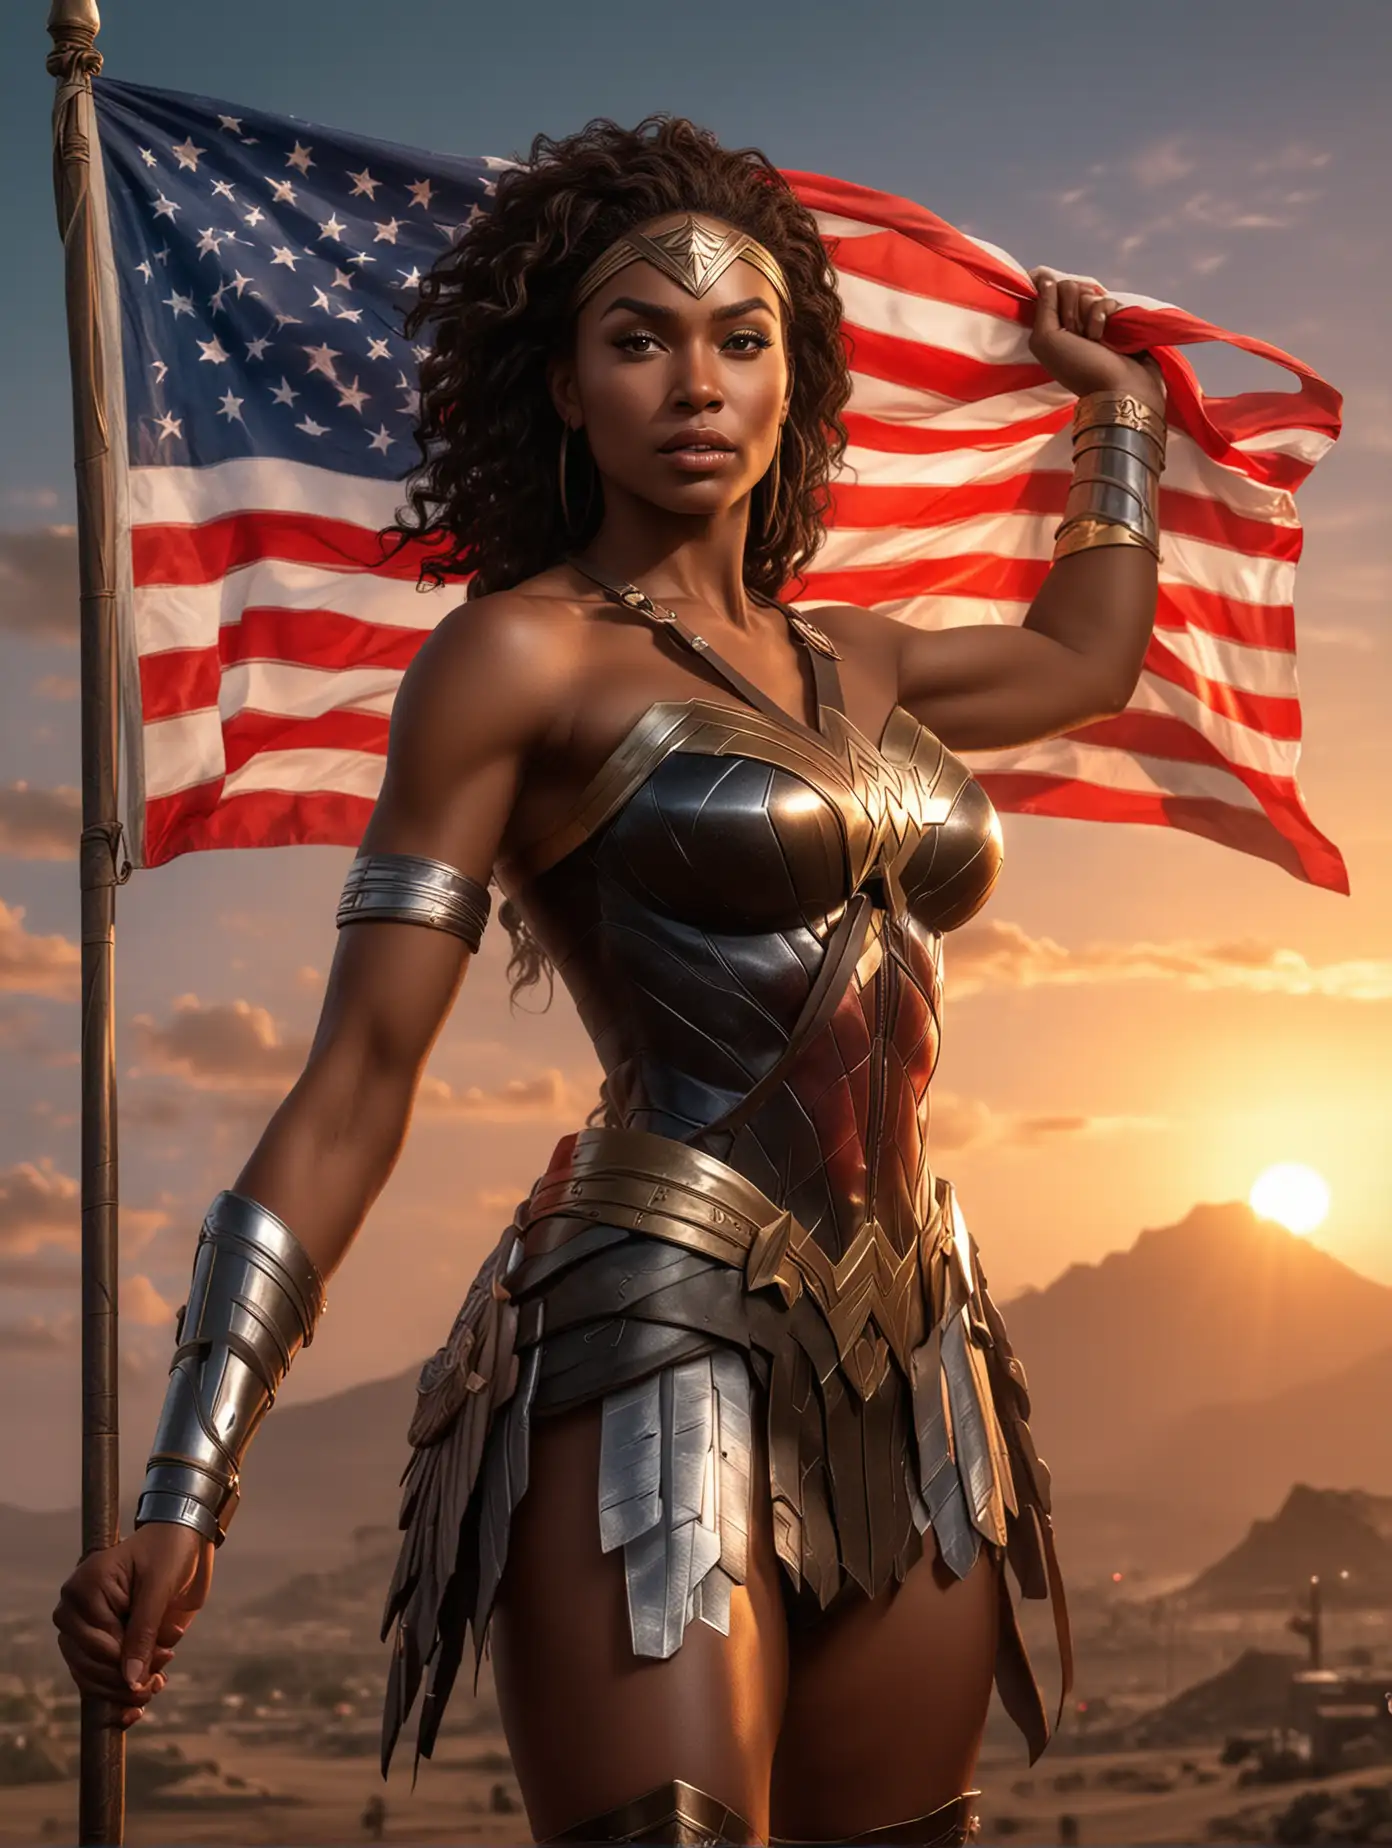 Kenyan Wonder Woman Heroic Portrait with American Flag